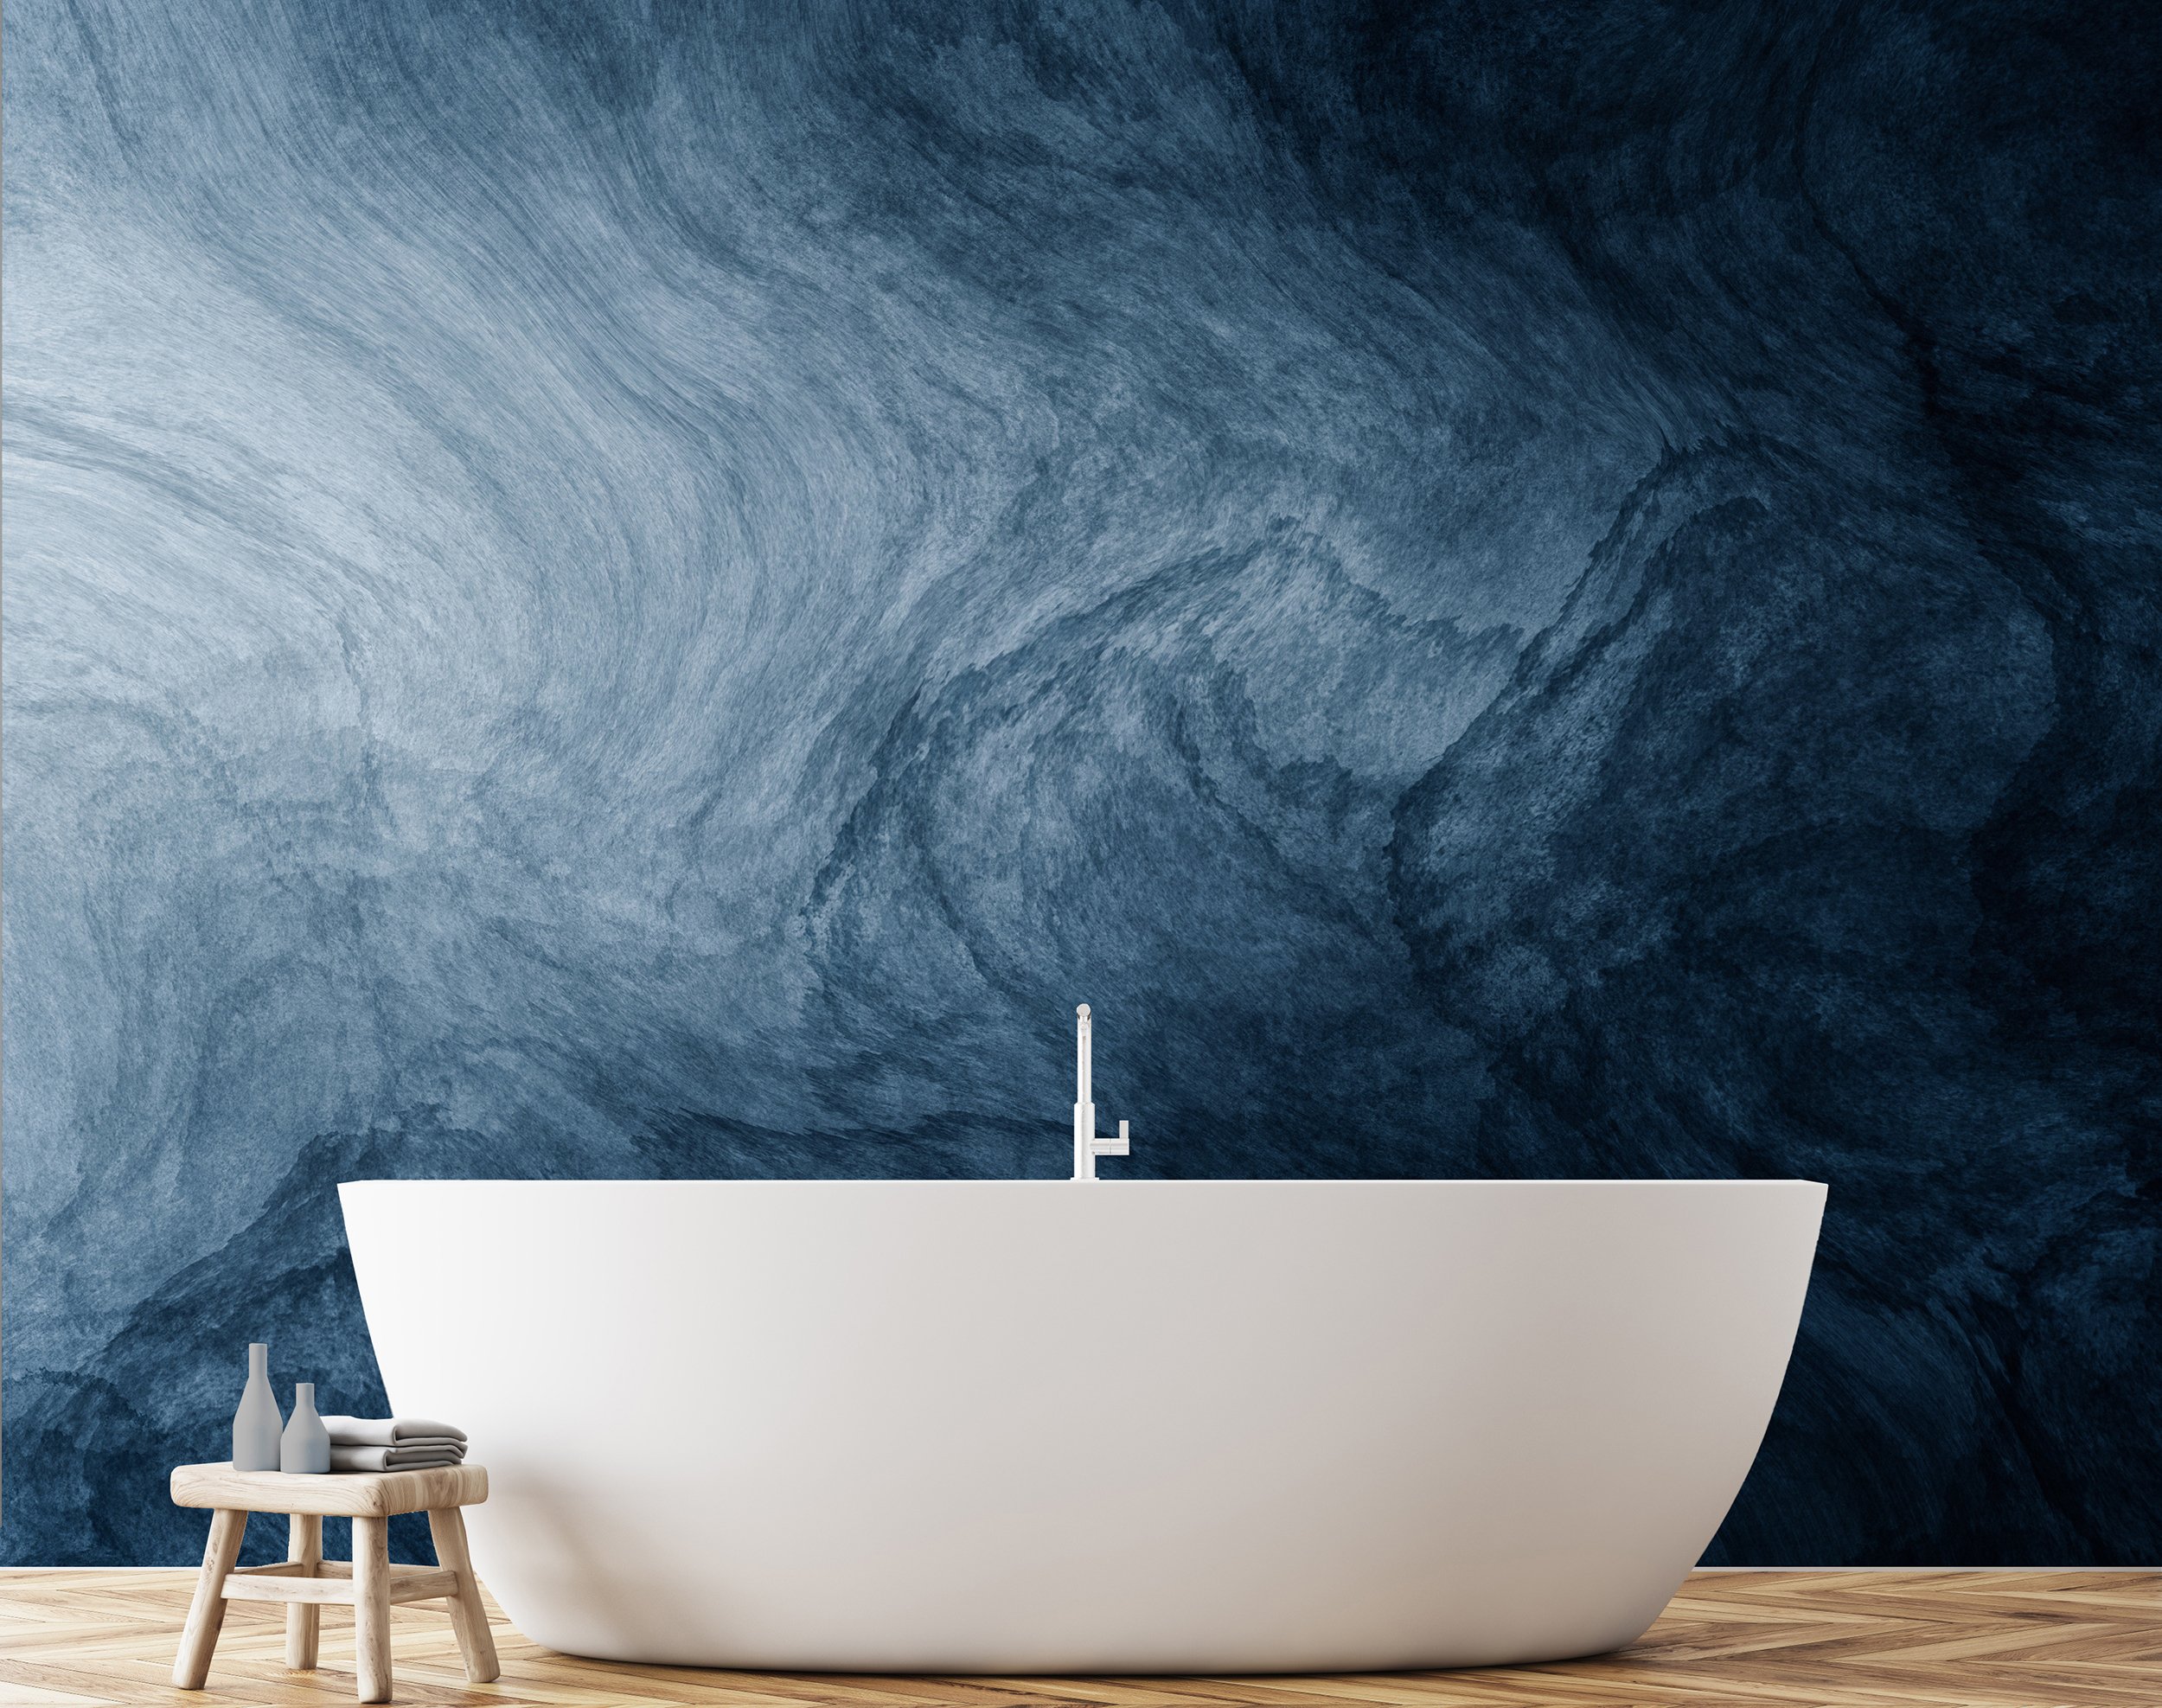 Bathroom Wallpaper Ideas to Make Rooms looks Luxurious